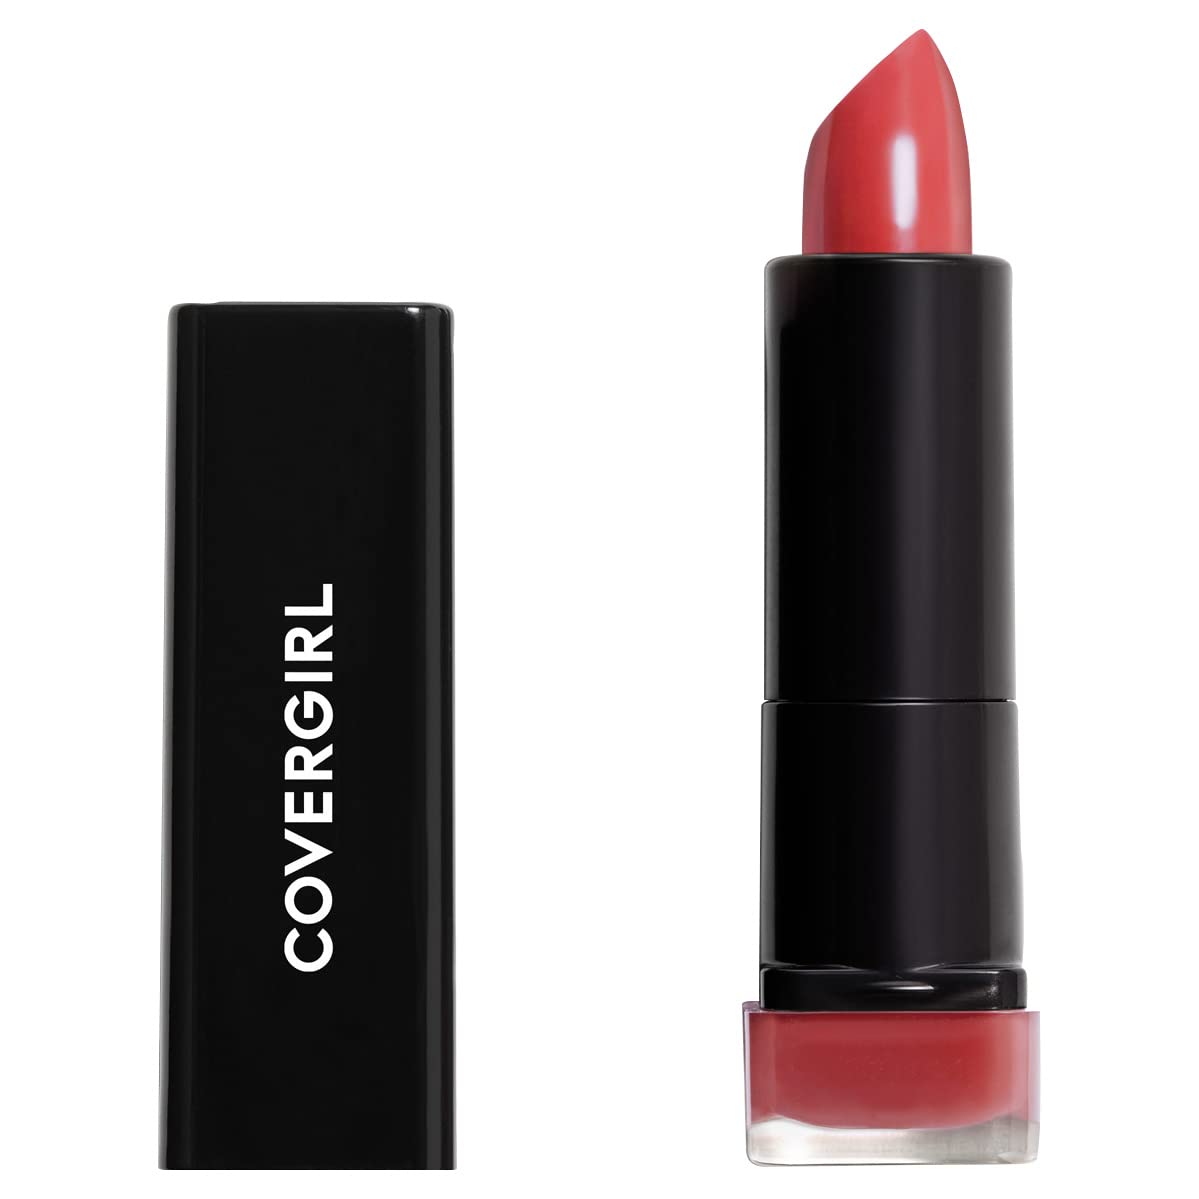 COVERGIRL Exhibitionist Cream Lipstick, 305 Hot, 0.12 oz, Lipstick, Moisturizing Lipstick, Long Lasting Lipstick, Glossy Lipstick, Hydrating Lipstick, Long Lasting